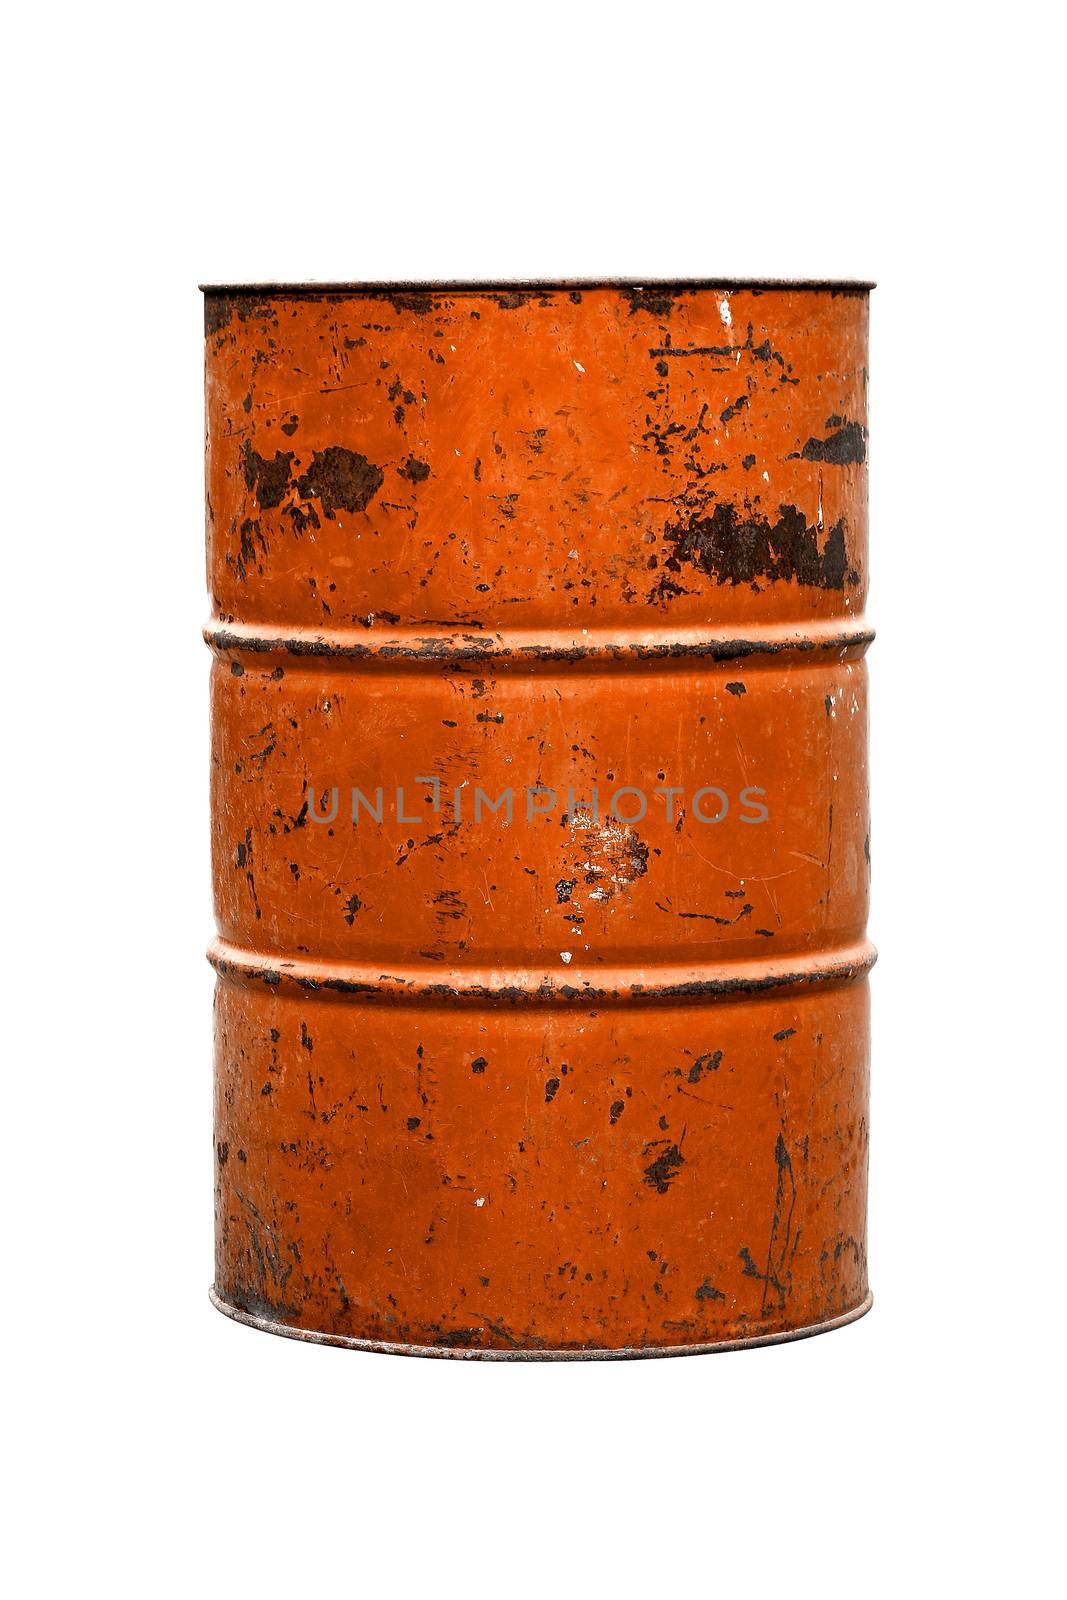 Barrel Oil orange Old isolated on background white